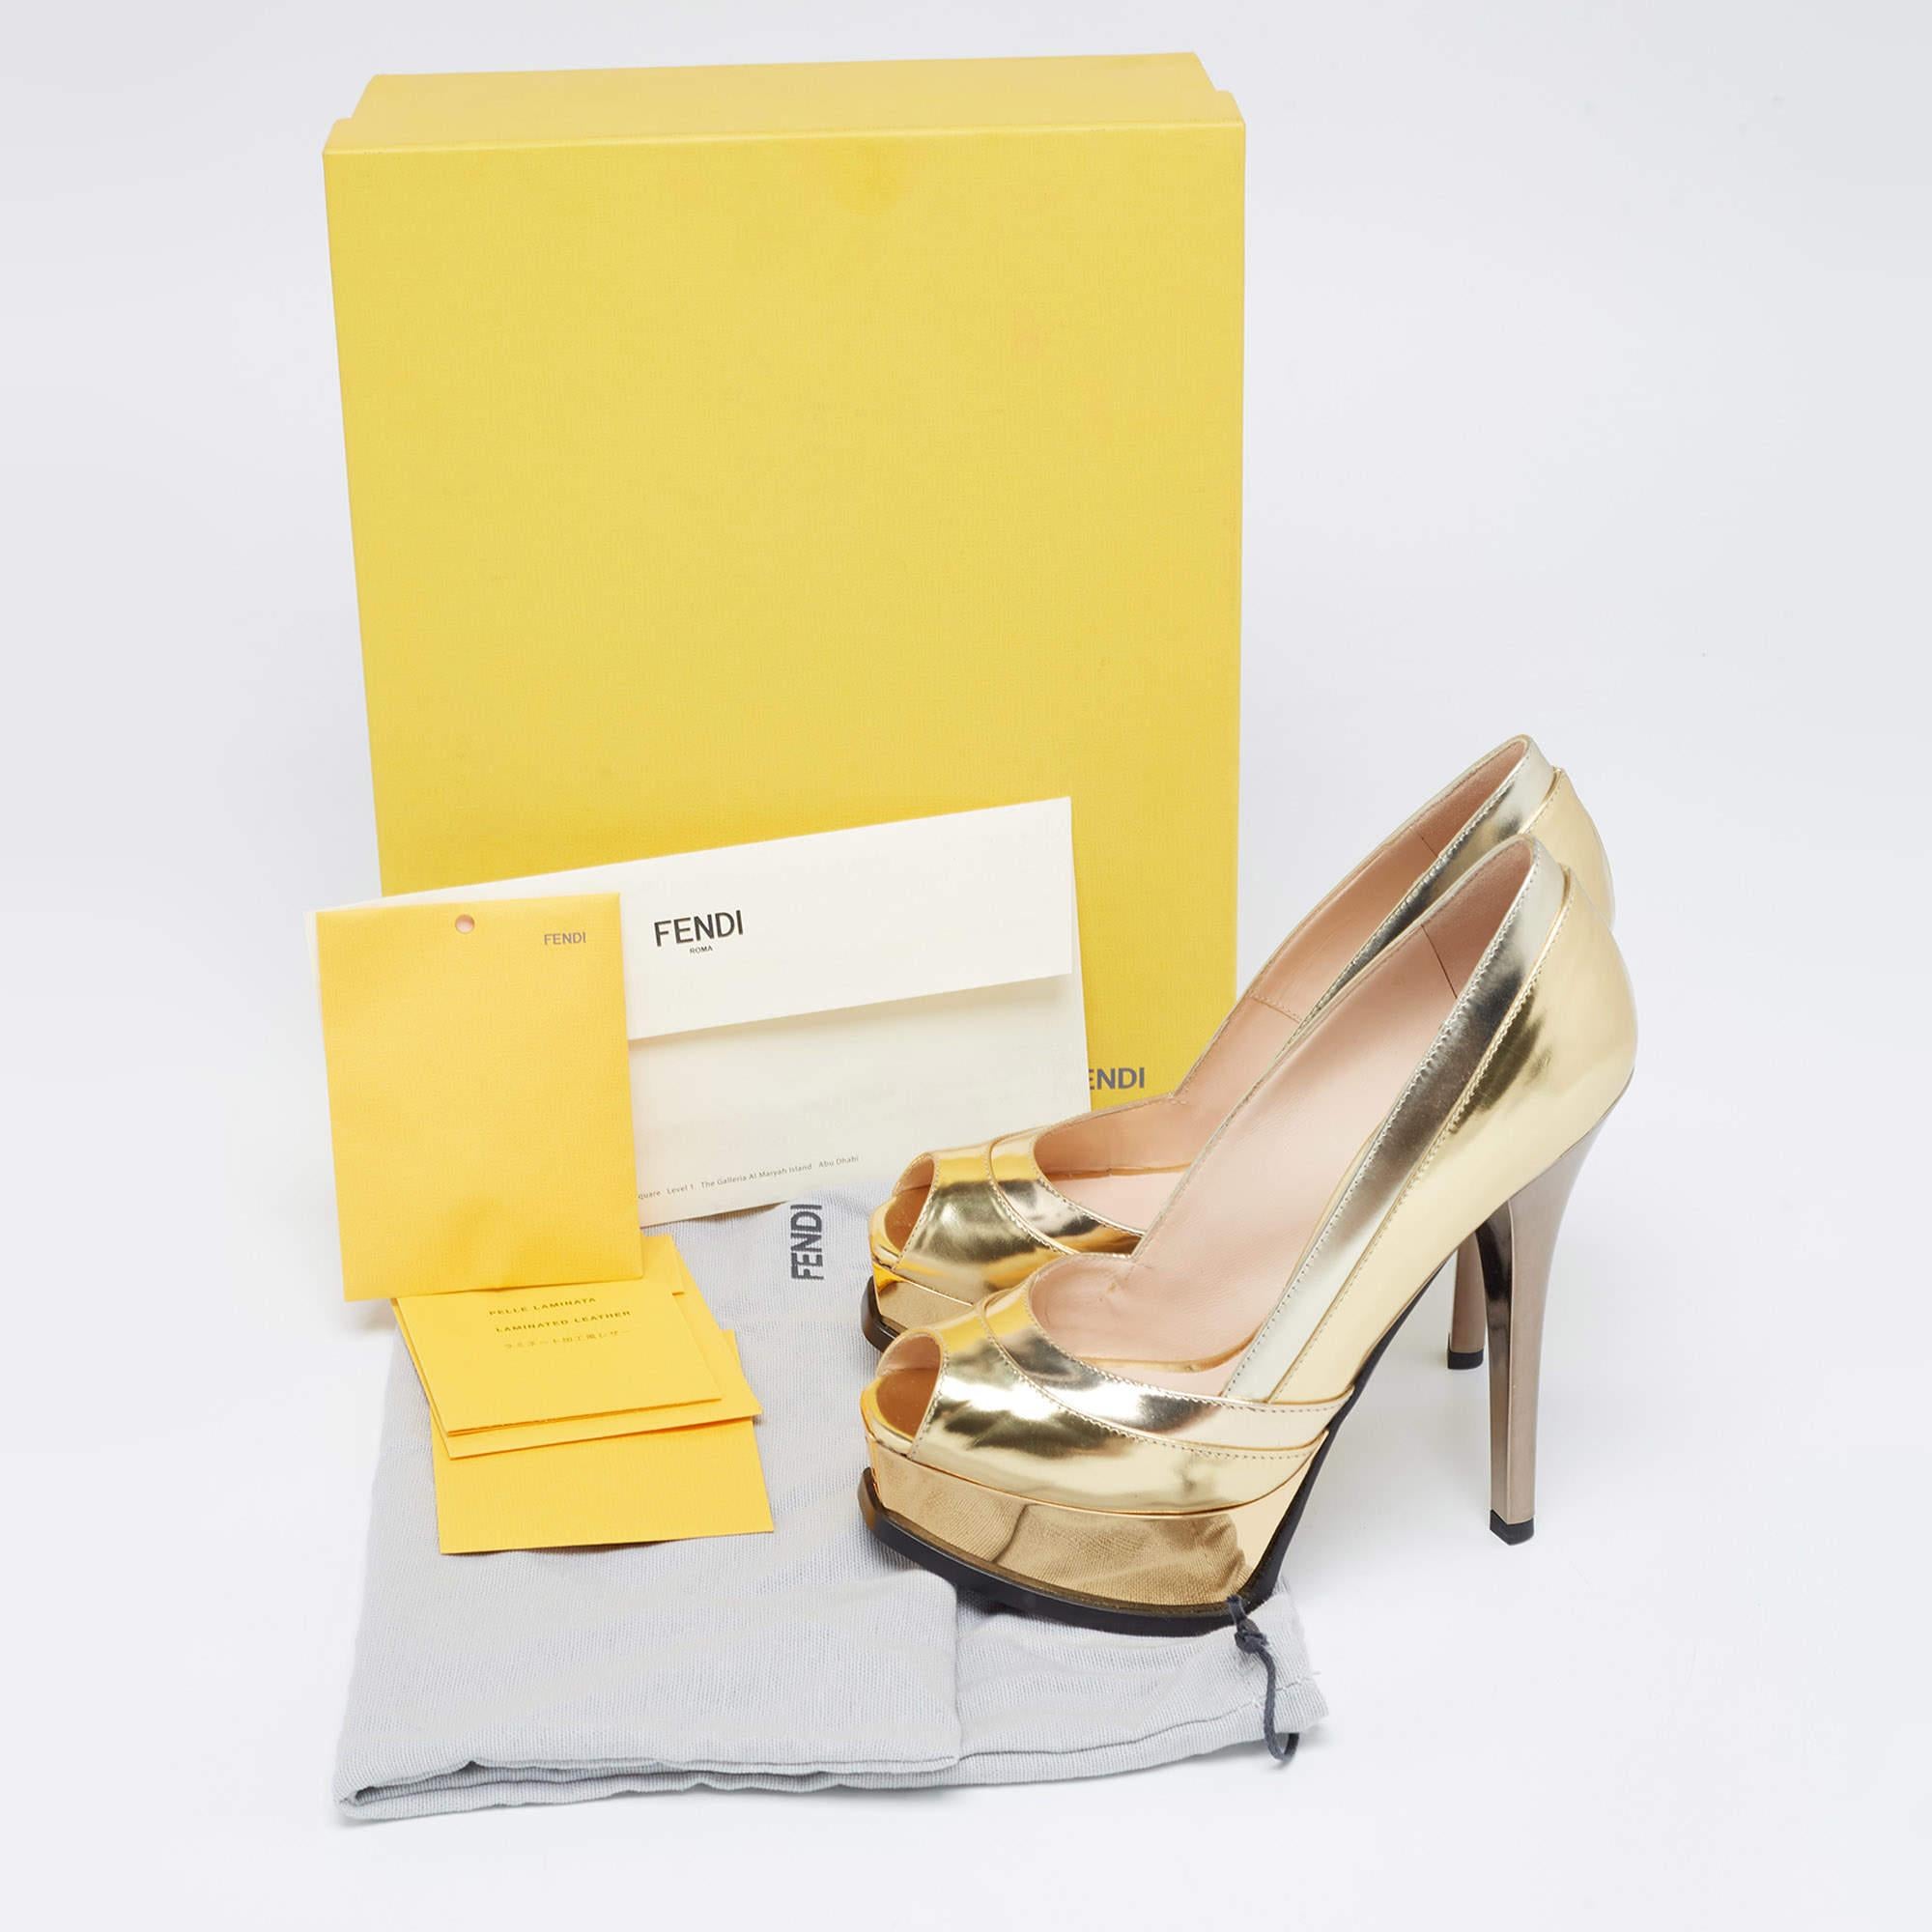 Fendi Gold Leather Fendista Peep Toe Pumps Size 36.5 In Good Condition For Sale In Dubai, Al Qouz 2